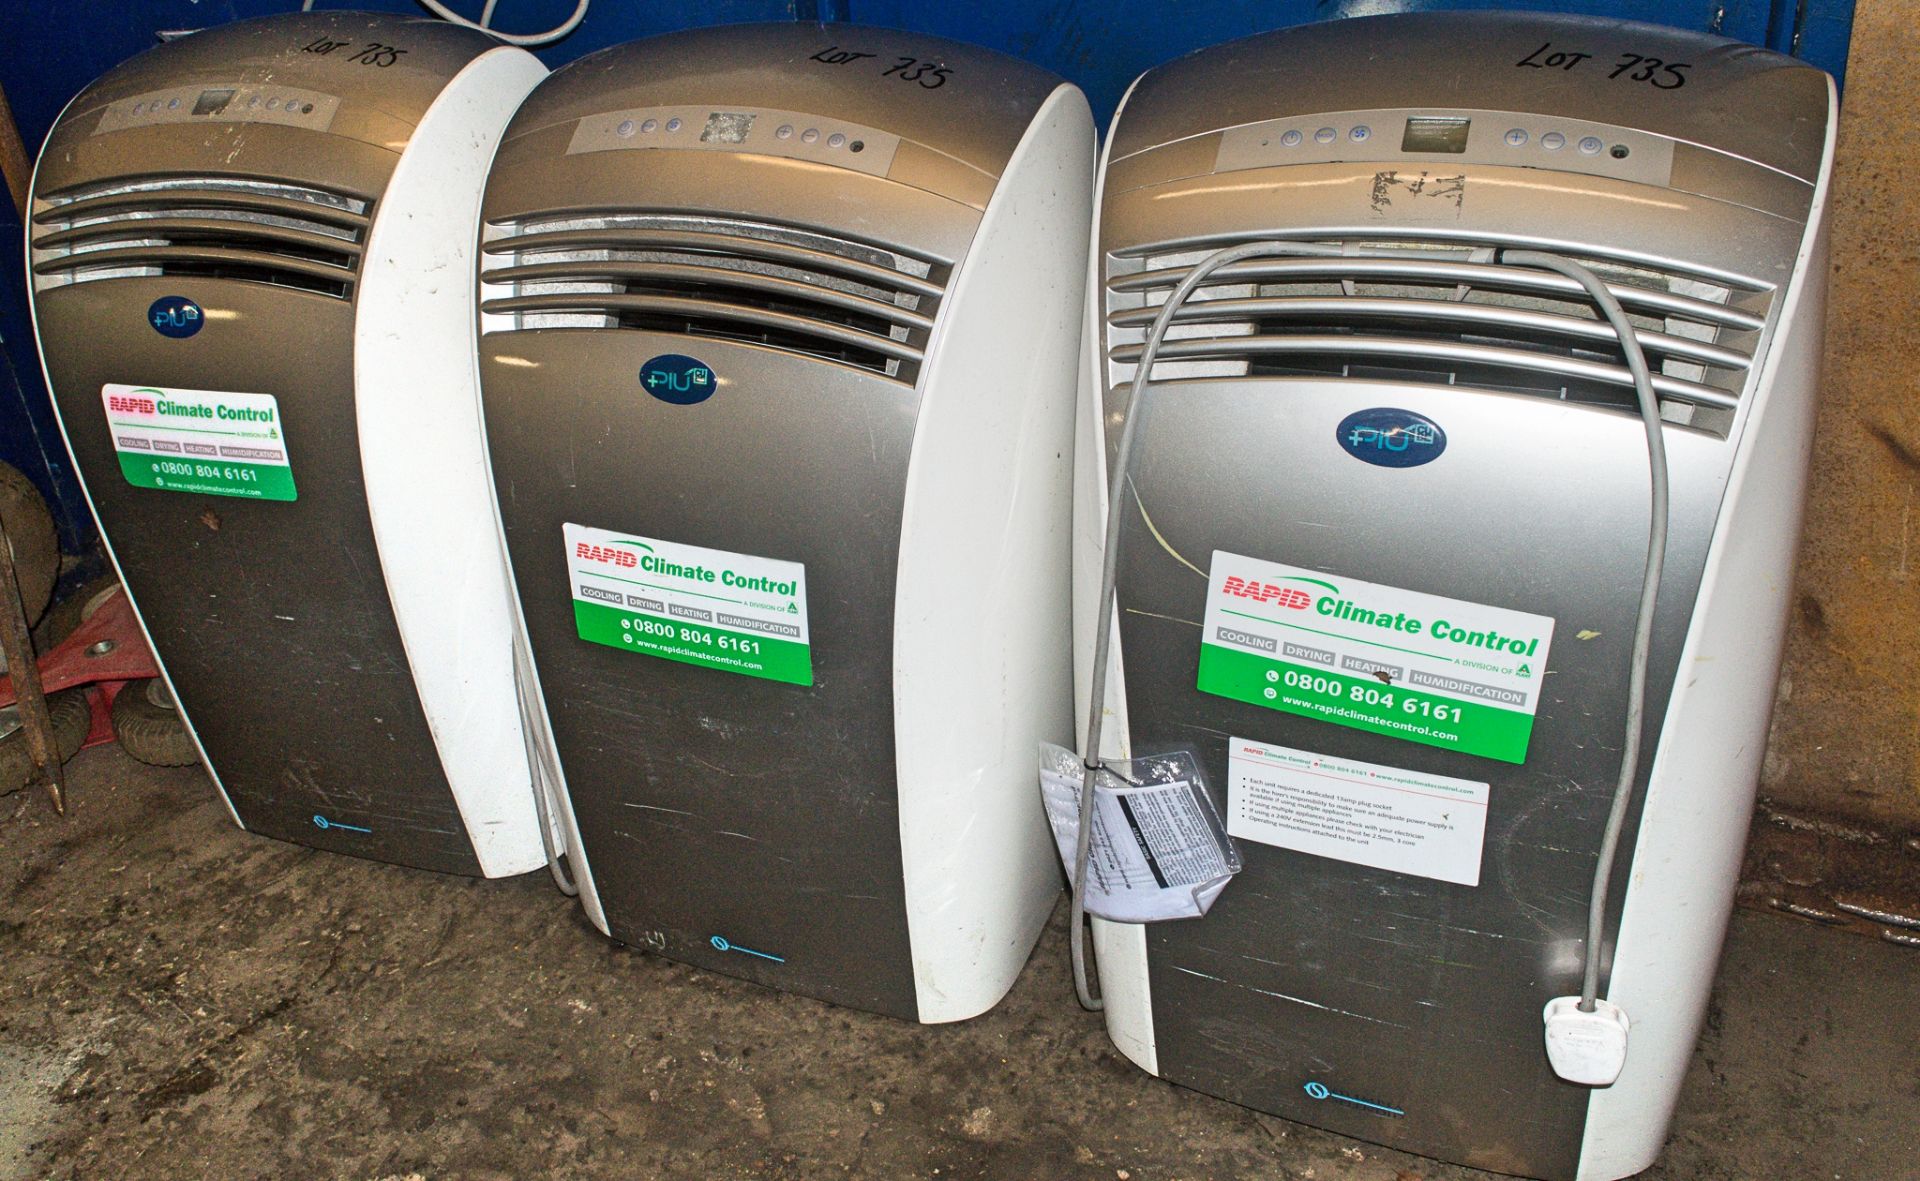 3 - 240v air conditioning units